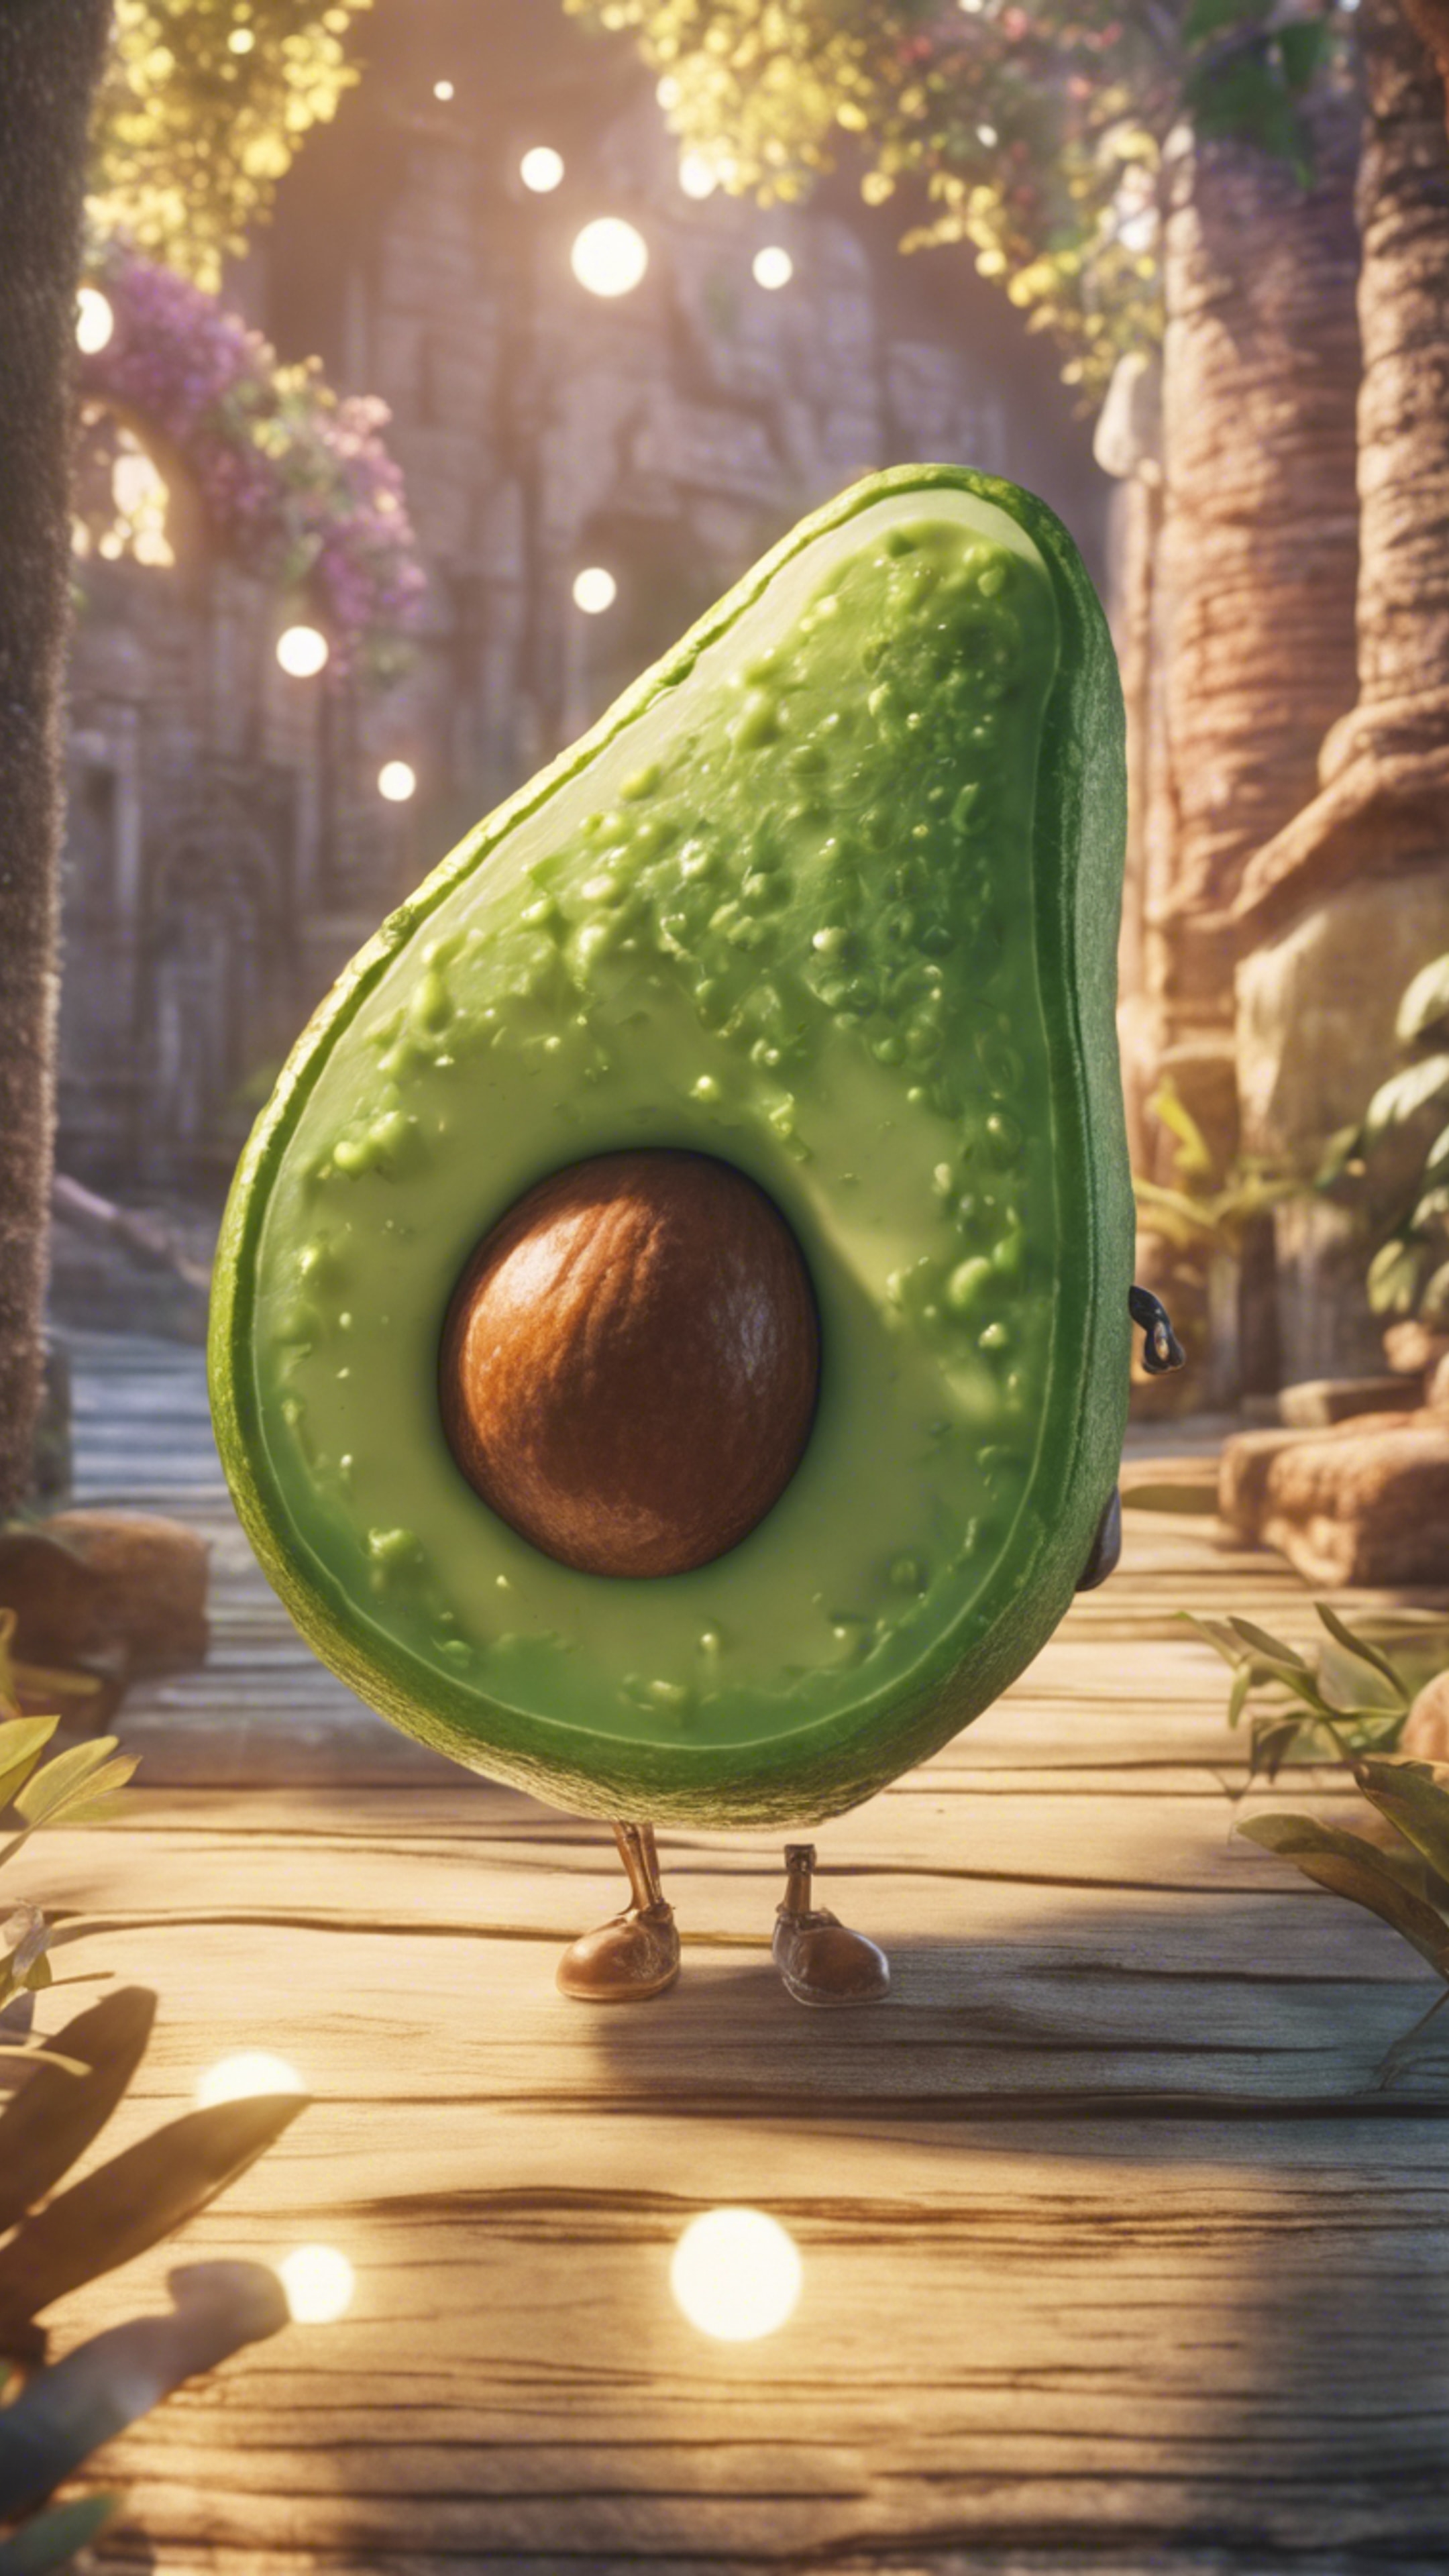 A manga-style scene of an avocado on a magical journey Wallpaper[452ab1c8ad254f0b95e7]